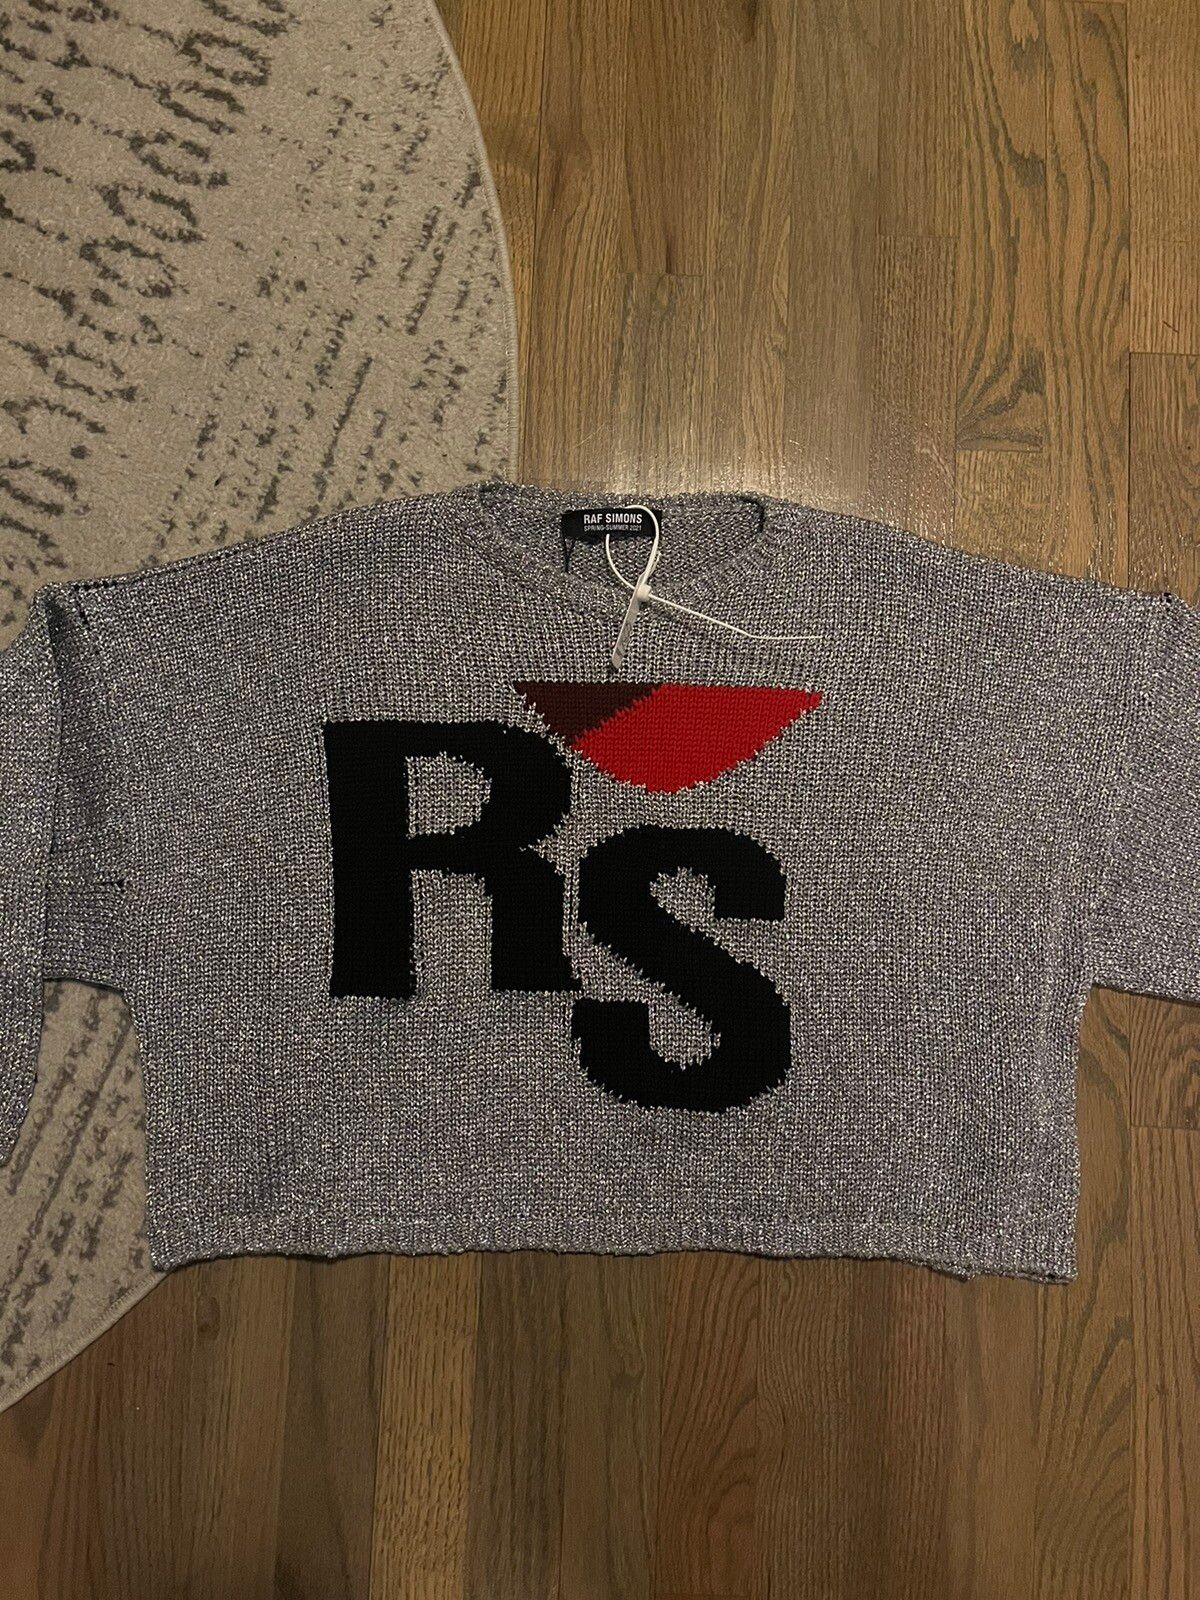 Raf Simons I Love NY Raf Oversized Cropped Sweater | Grailed